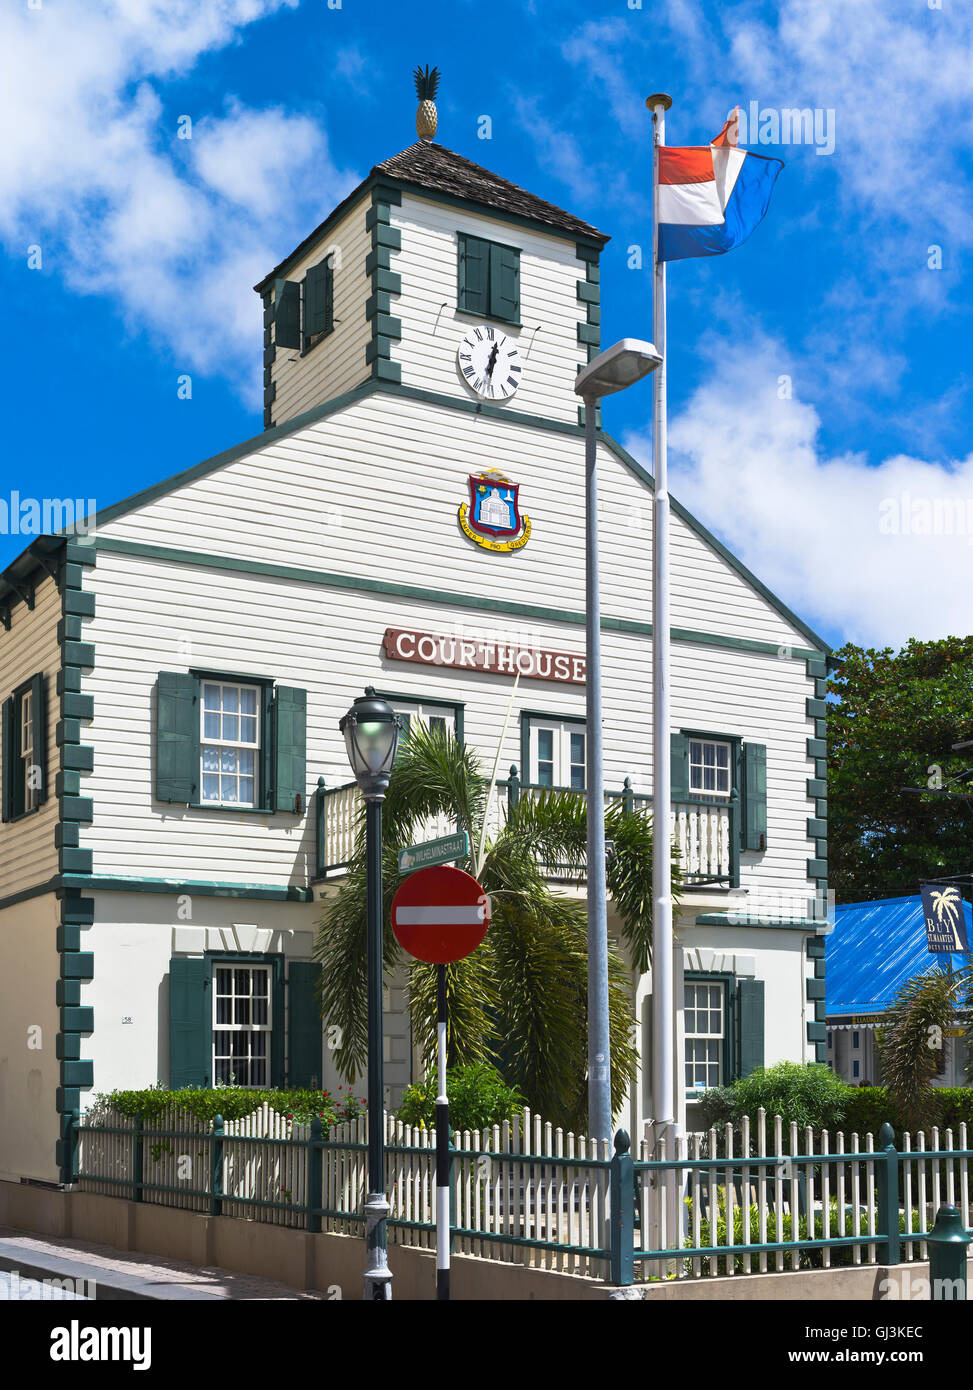 dh Philipsburg ST MAARTEN KARIBIK Kolonialgericht Uhrturm Gebäude Niederländische Flagge Fahnenmast Stockfoto